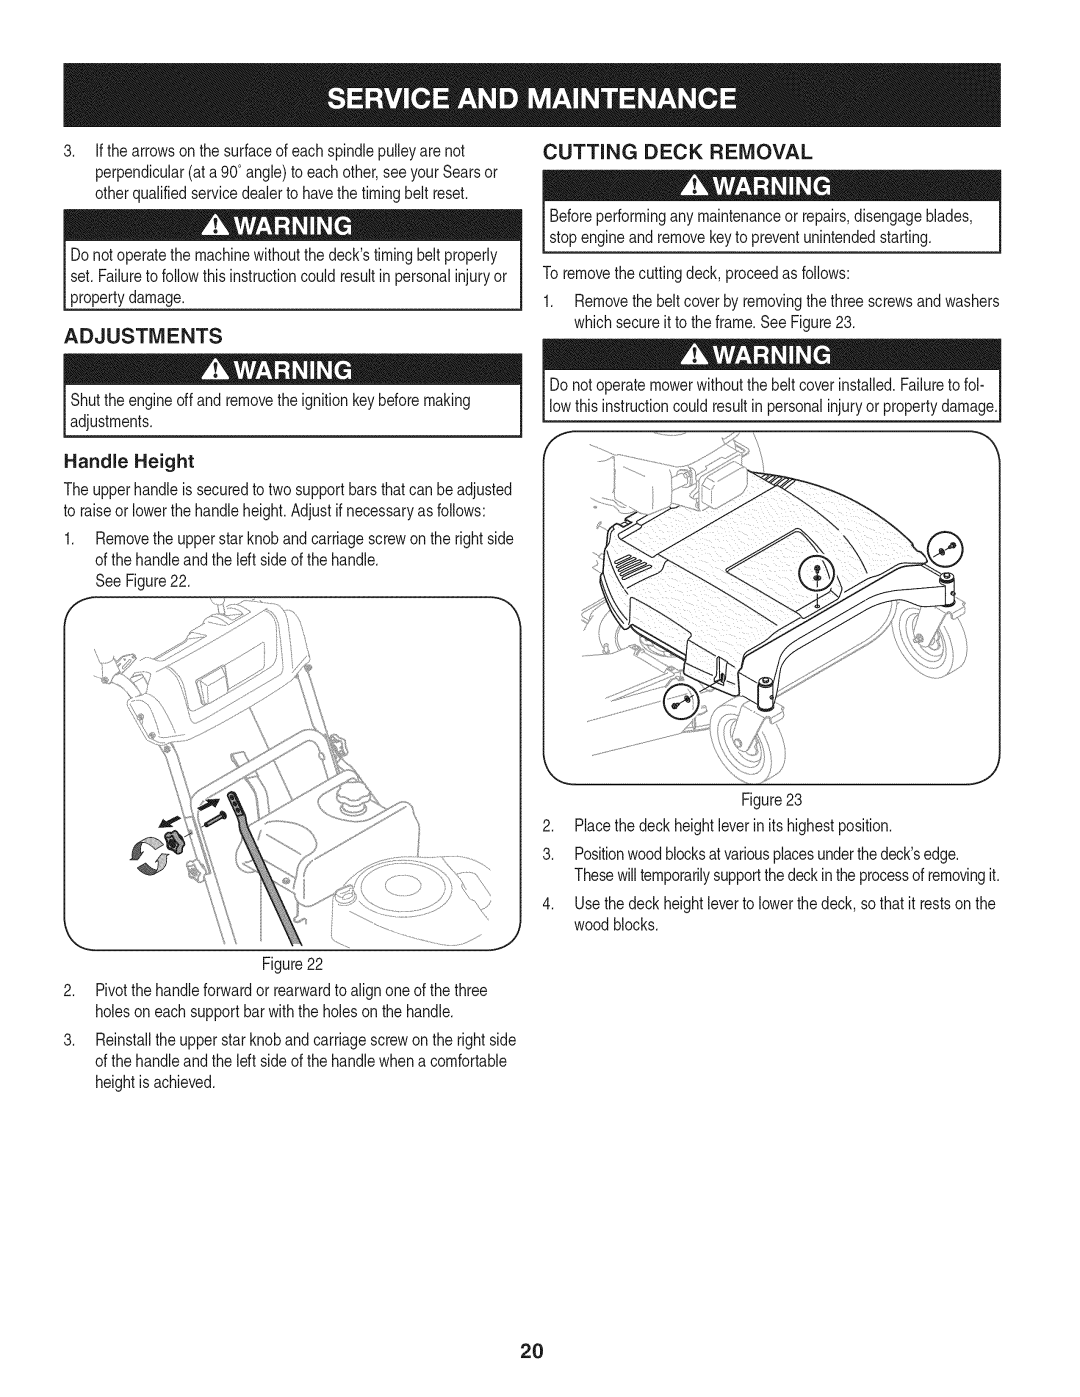 Craftsman 247.889980 manual Adjustments, Cutting Deck Removal 